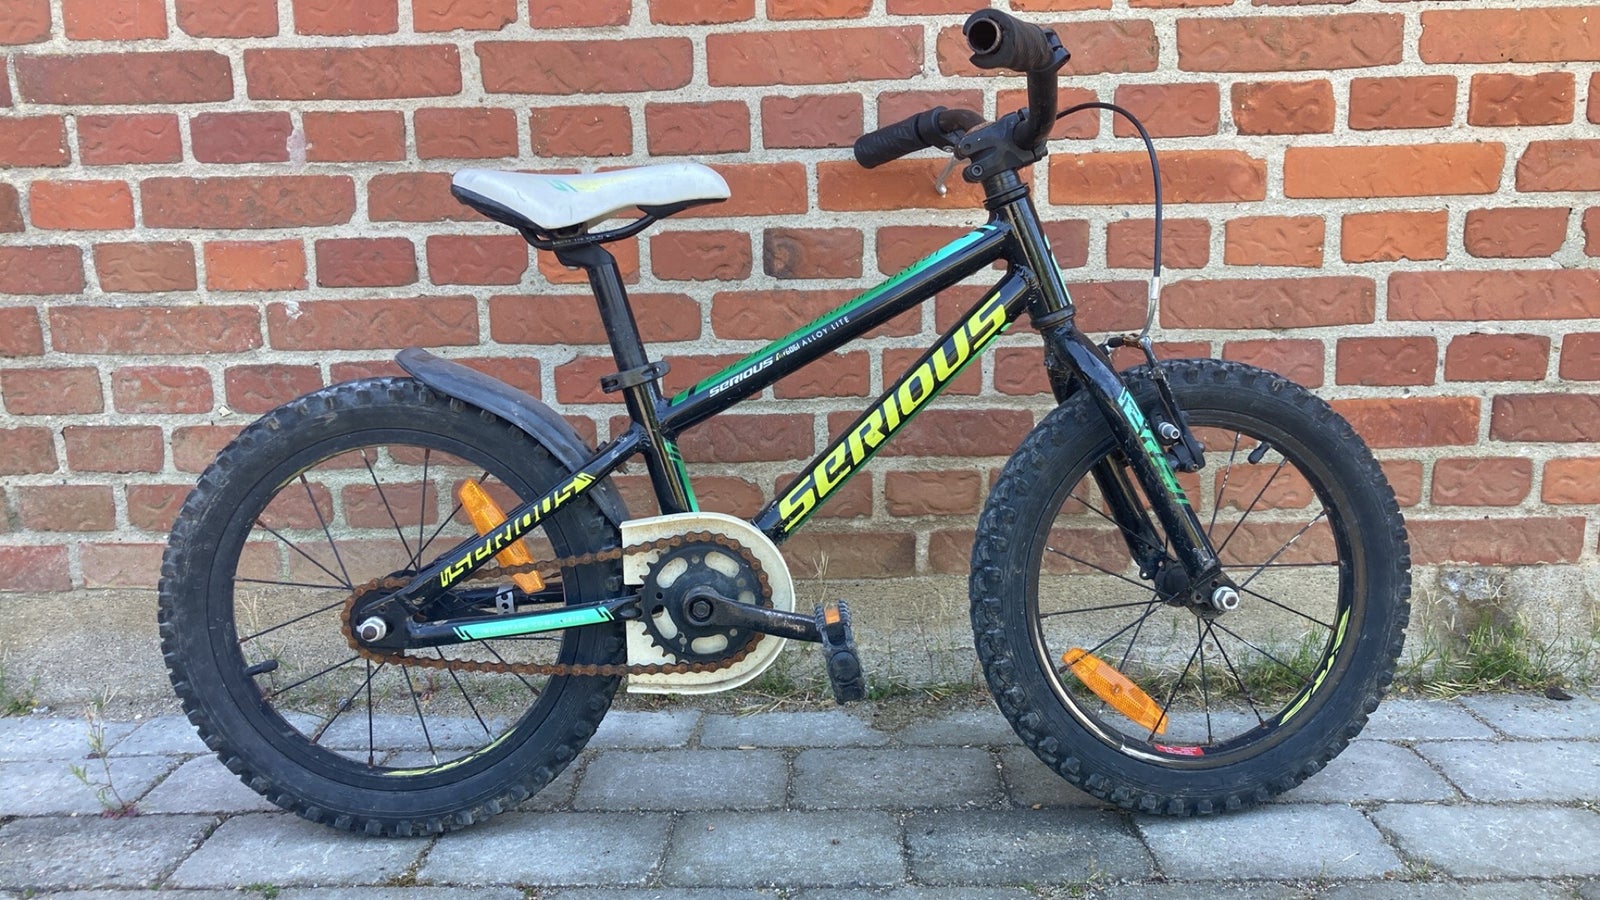 Unisex børnecykel, mountainbike, 16 tommer hjul